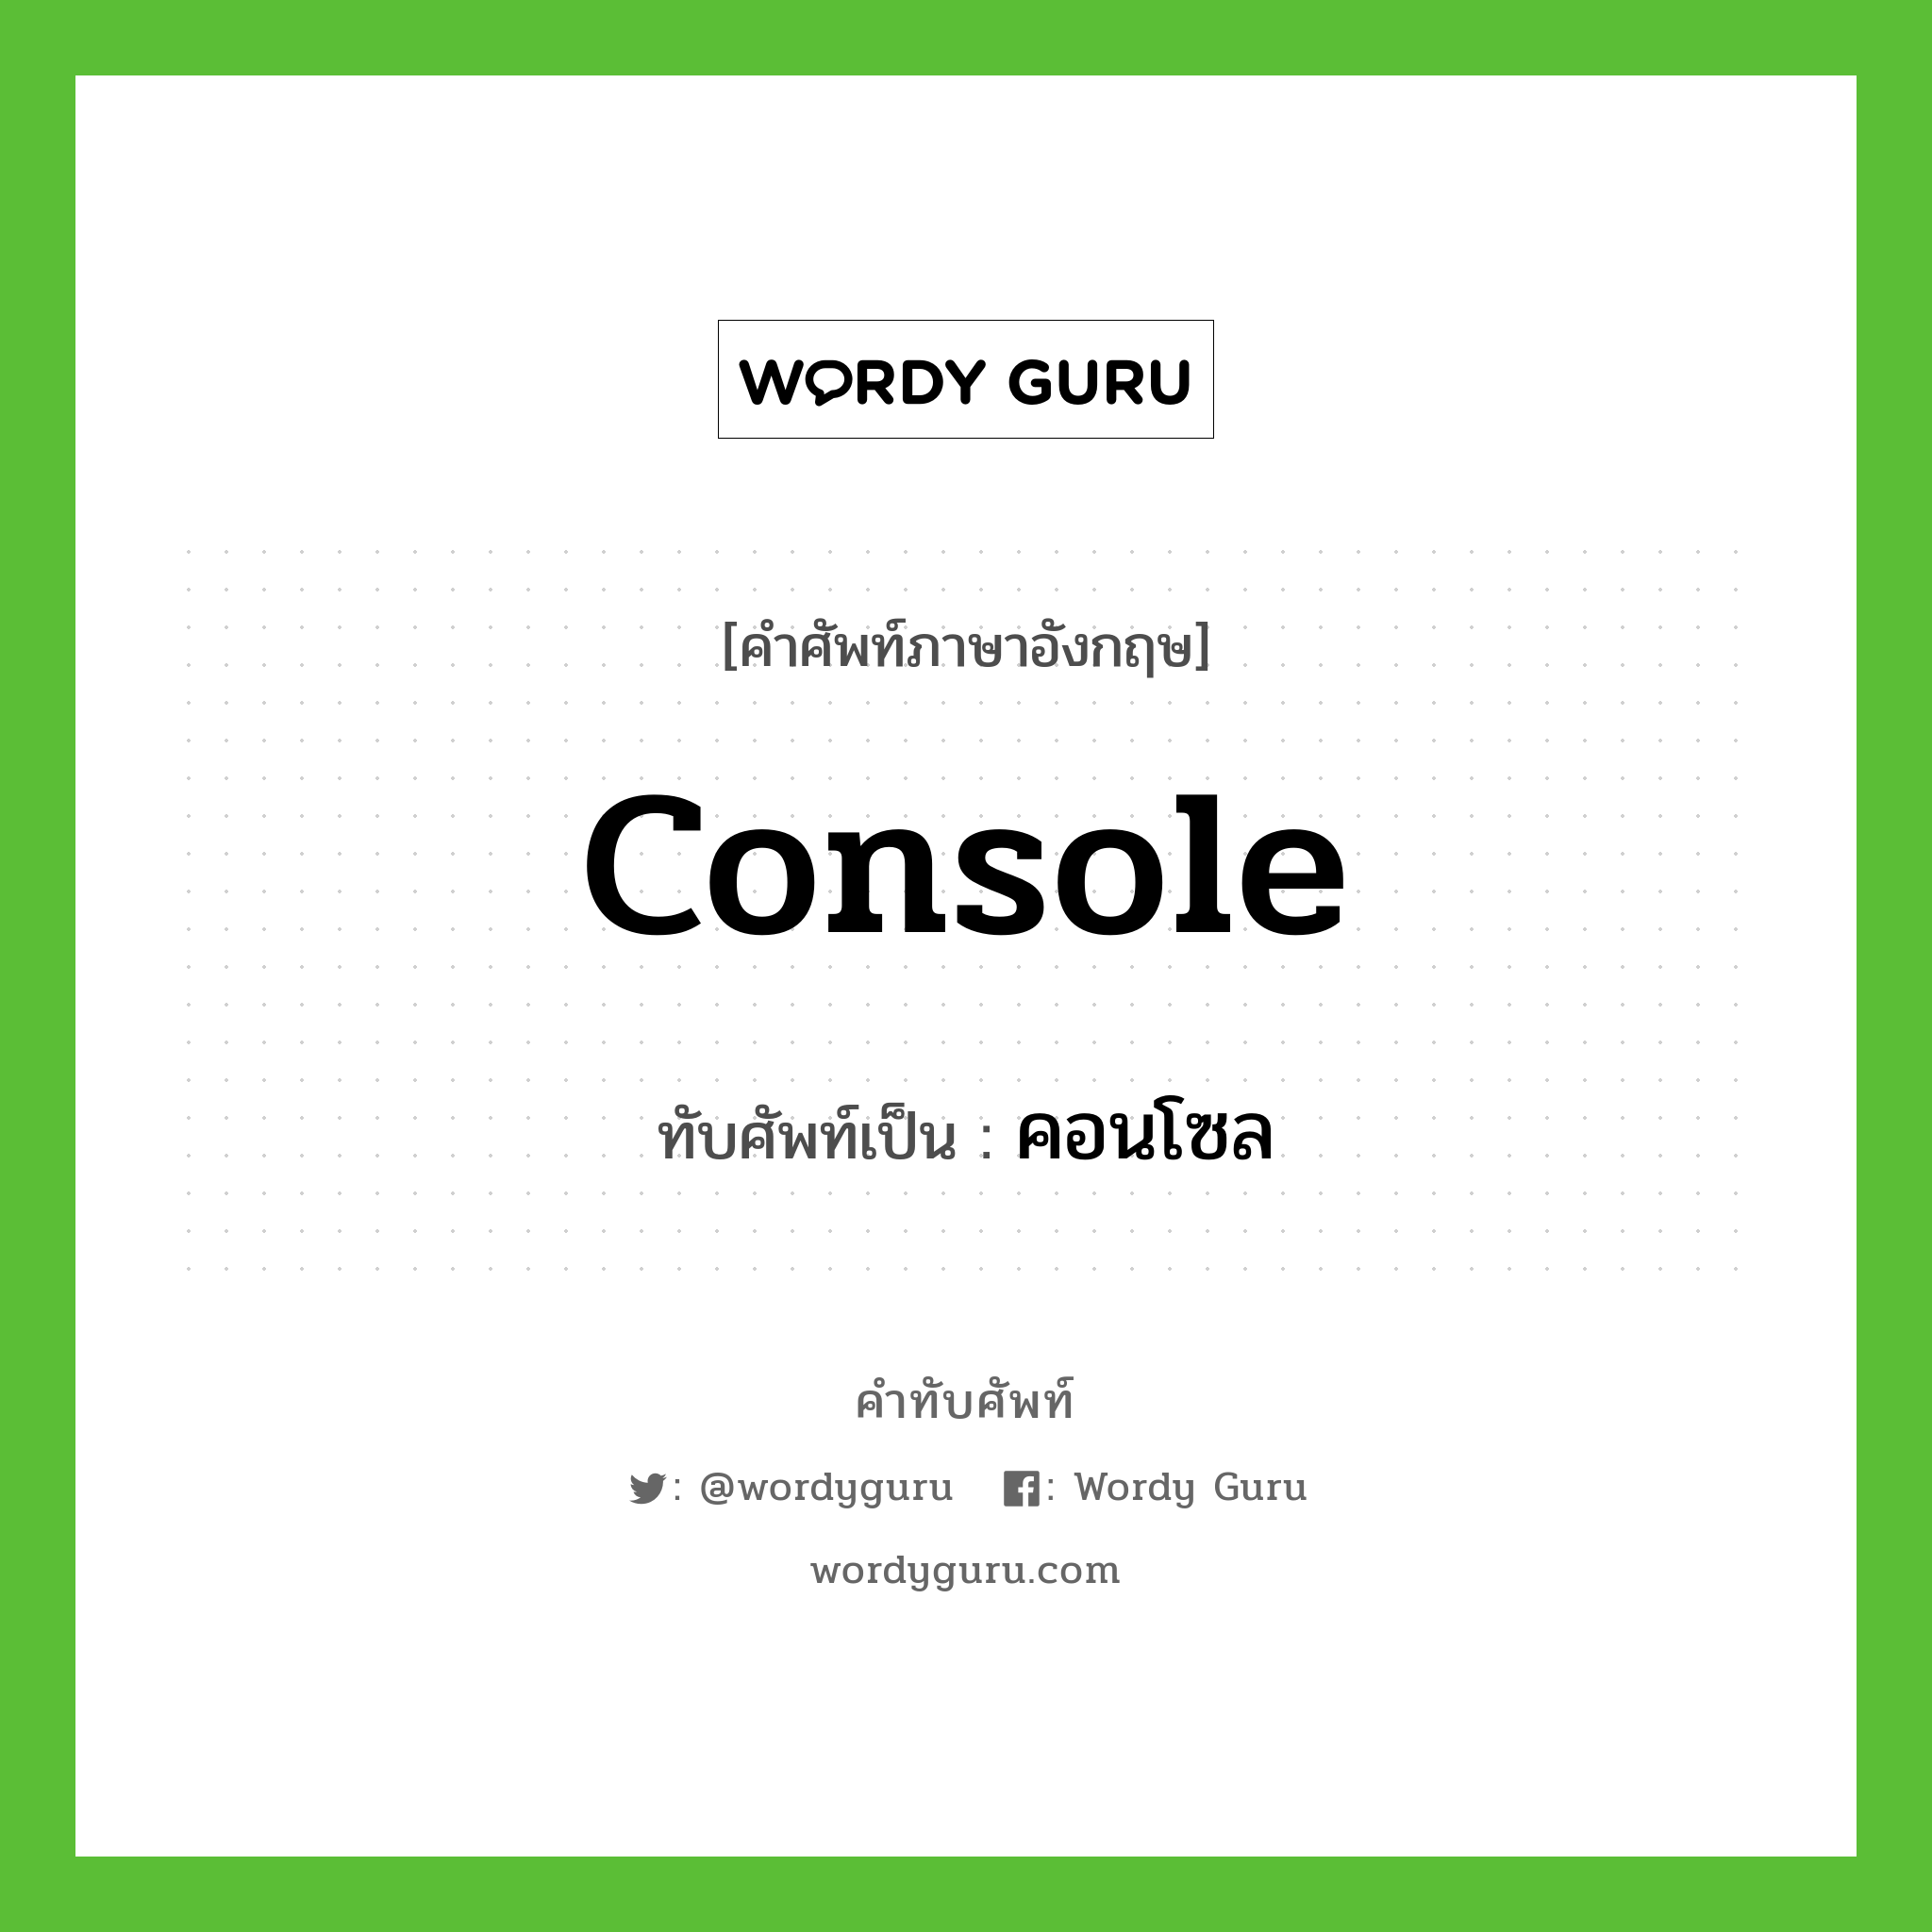 console เขียนเป็นคำไทยว่าอะไร?, คำศัพท์ภาษาอังกฤษ console ทับศัพท์เป็น คอนโซล